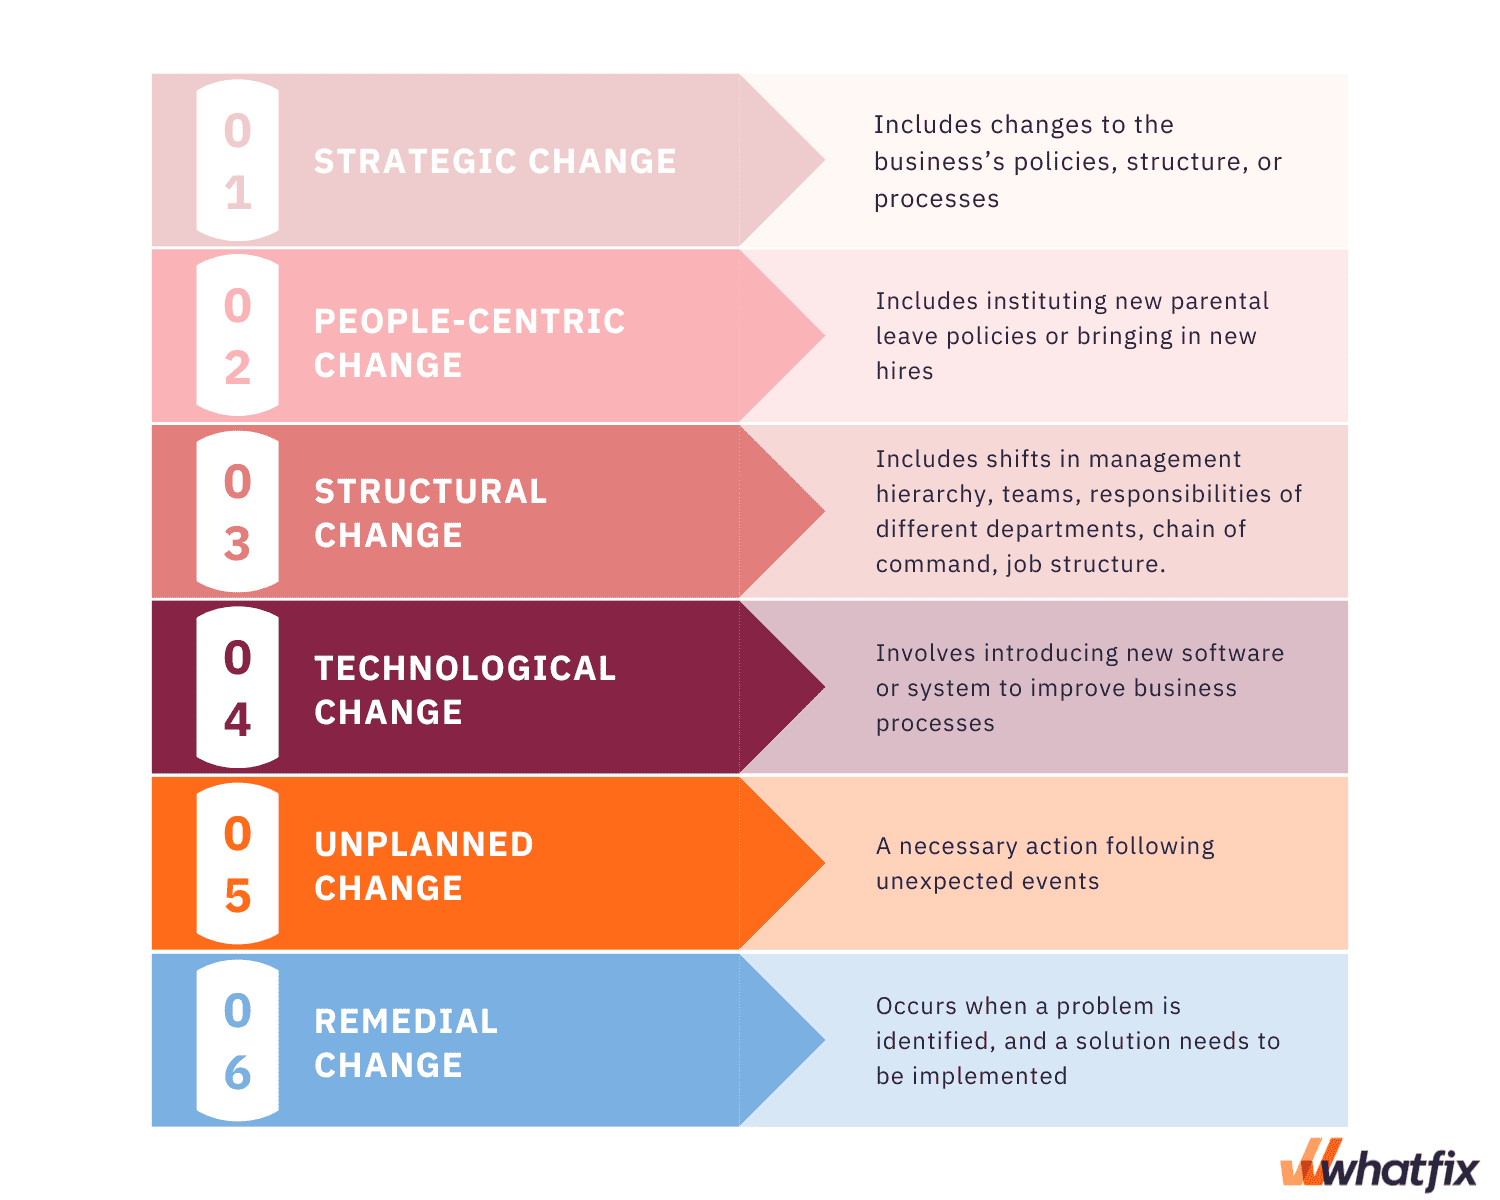 Types of organizational change